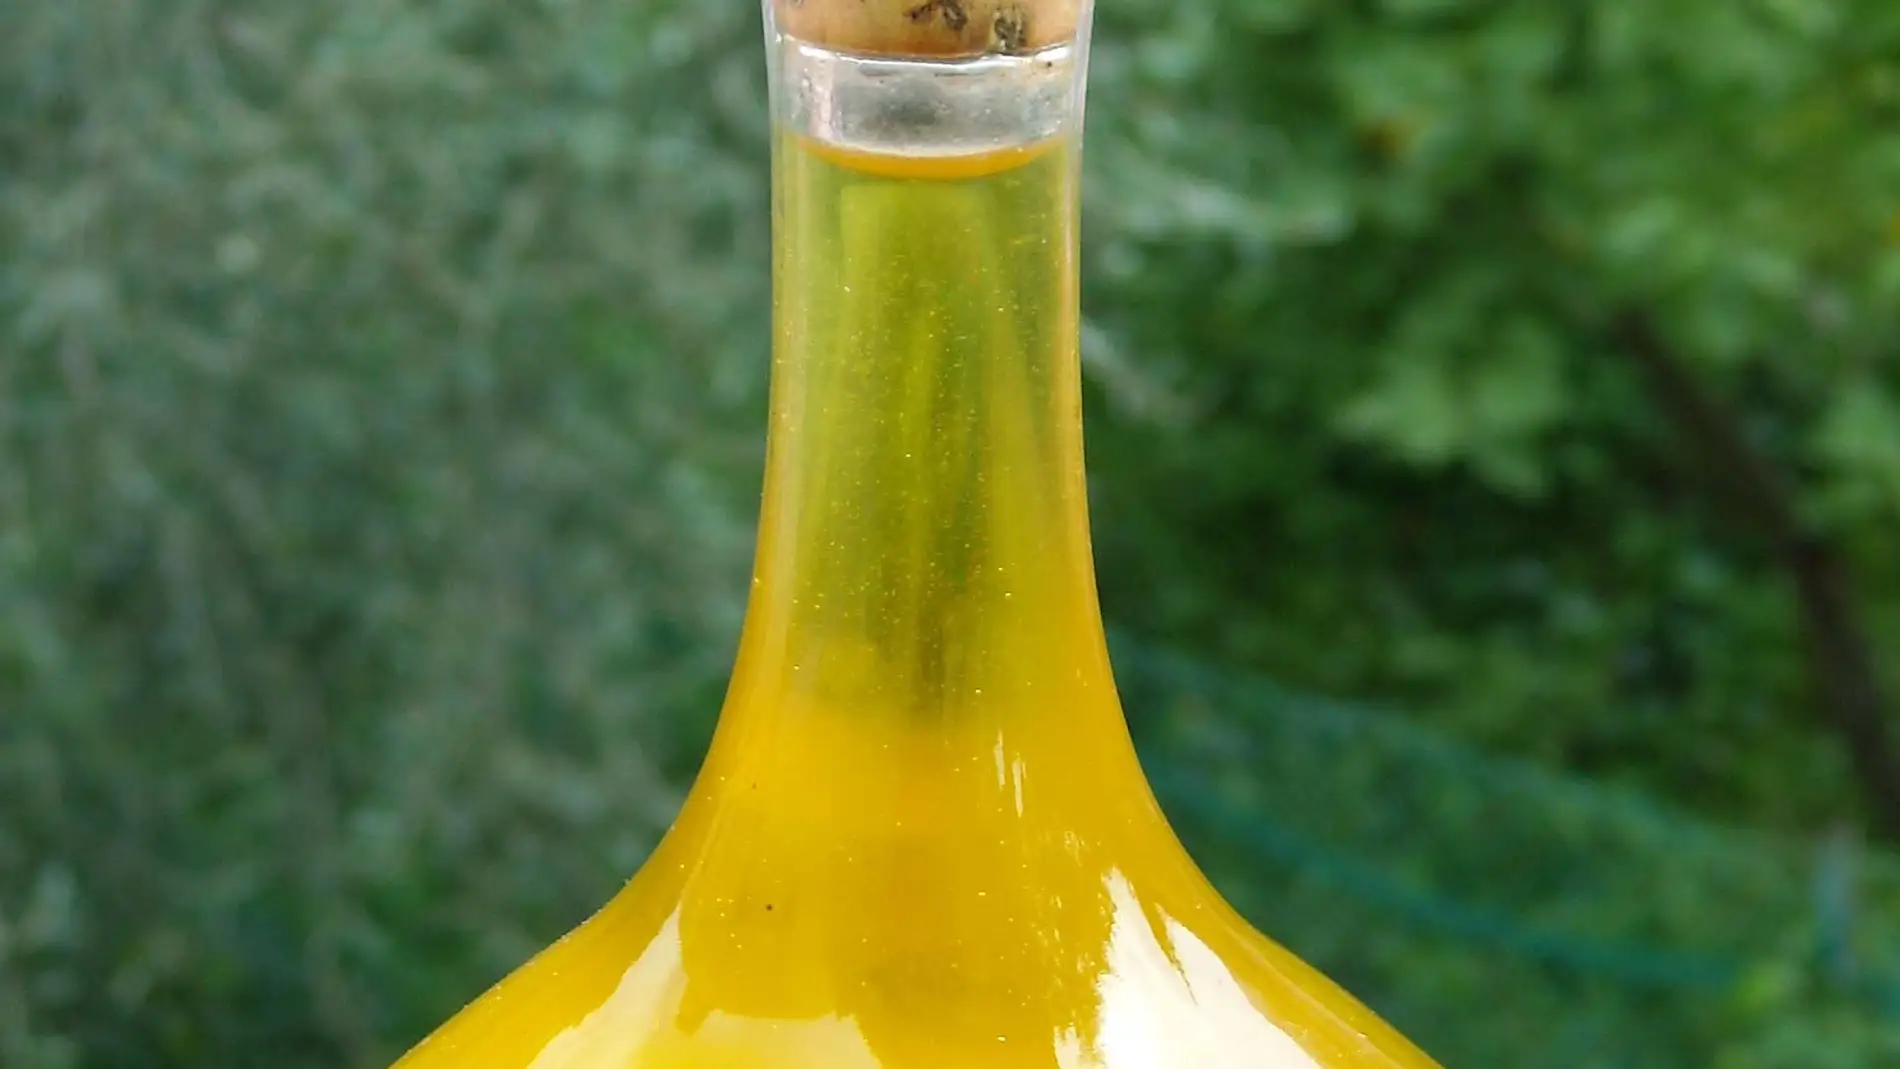 Tecnicas basadas en ADN para detectar aceite de oliva adulterado